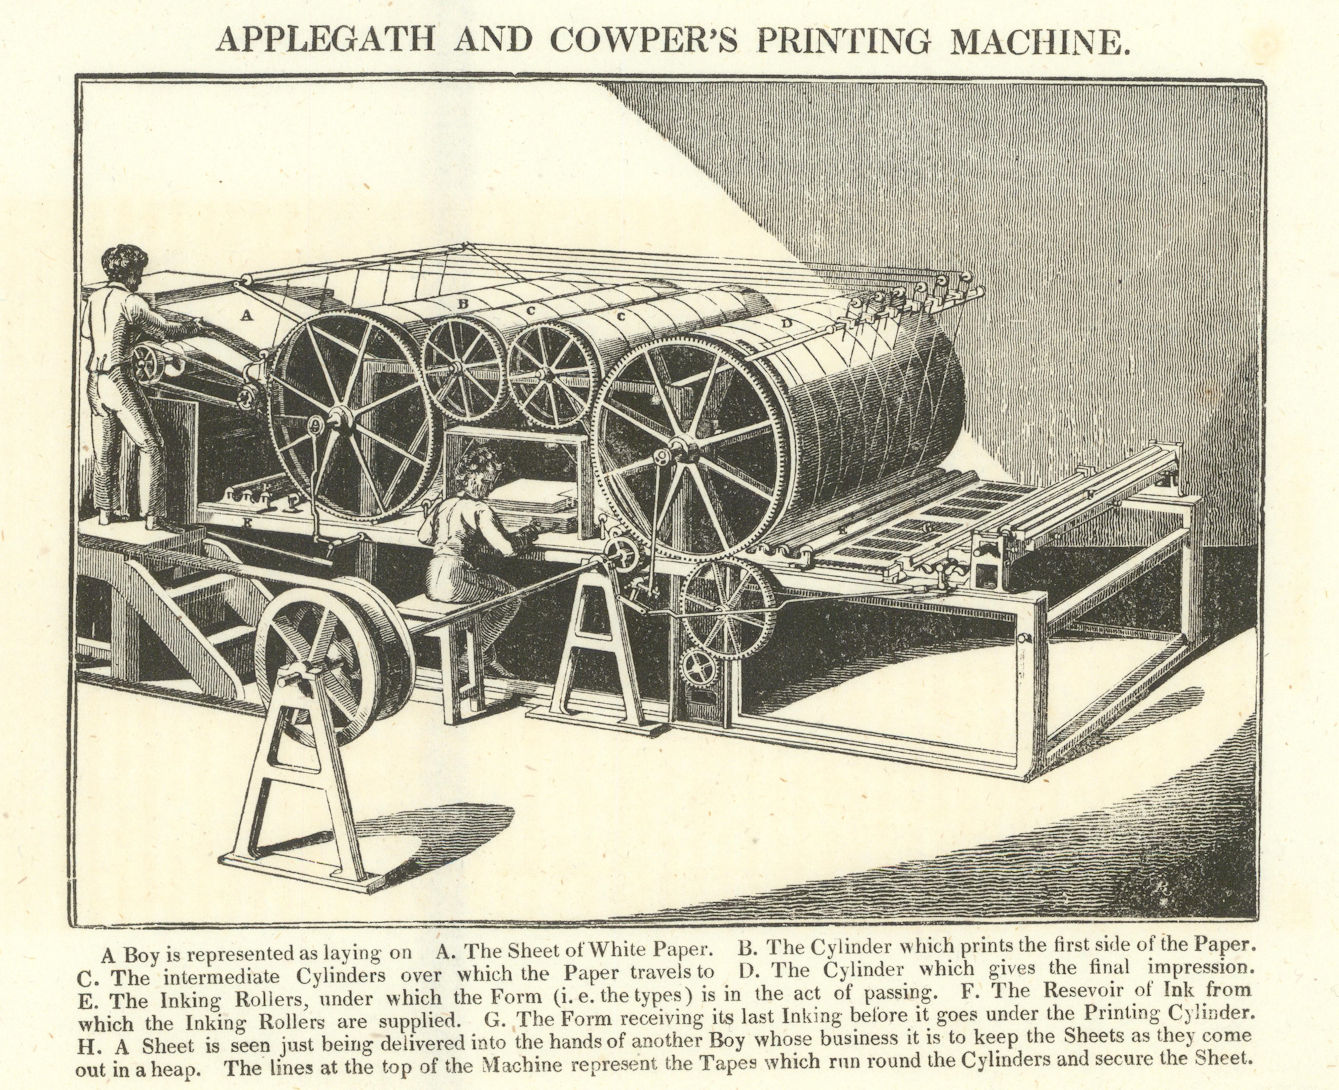 Applegath & Cowper's 4-cylinder Printing Machine, Stamford Street, Lambeth 1827